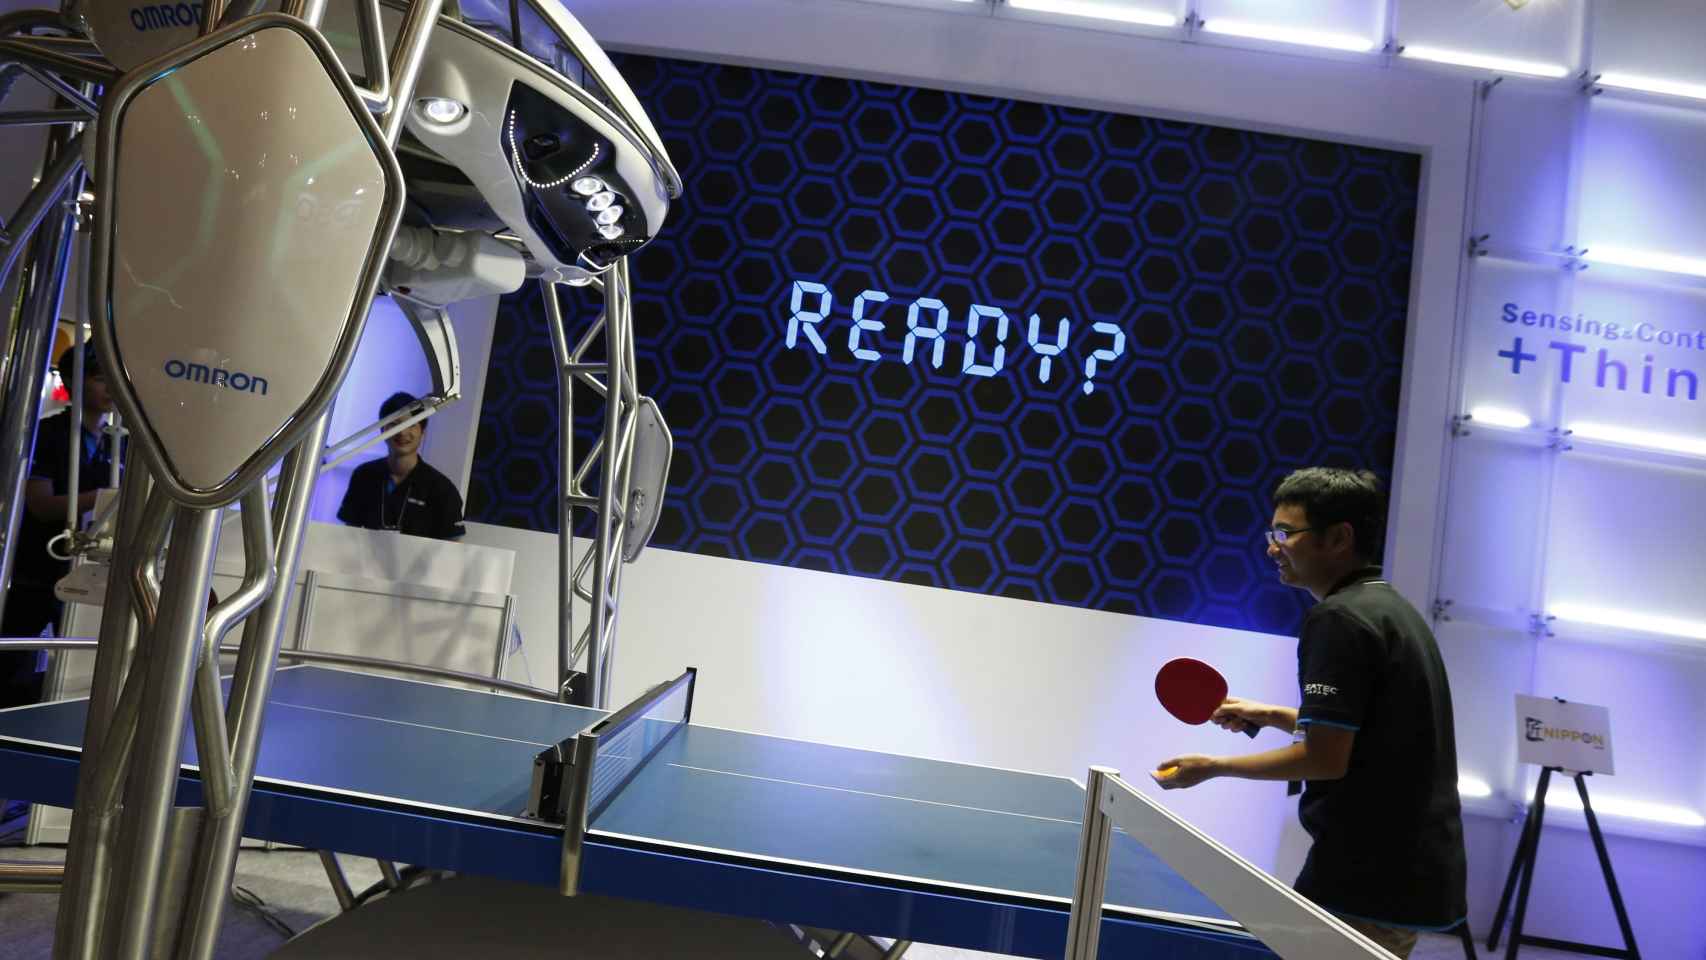 El FORPHEUS, el primer robot instructor de ping pong del mundo.